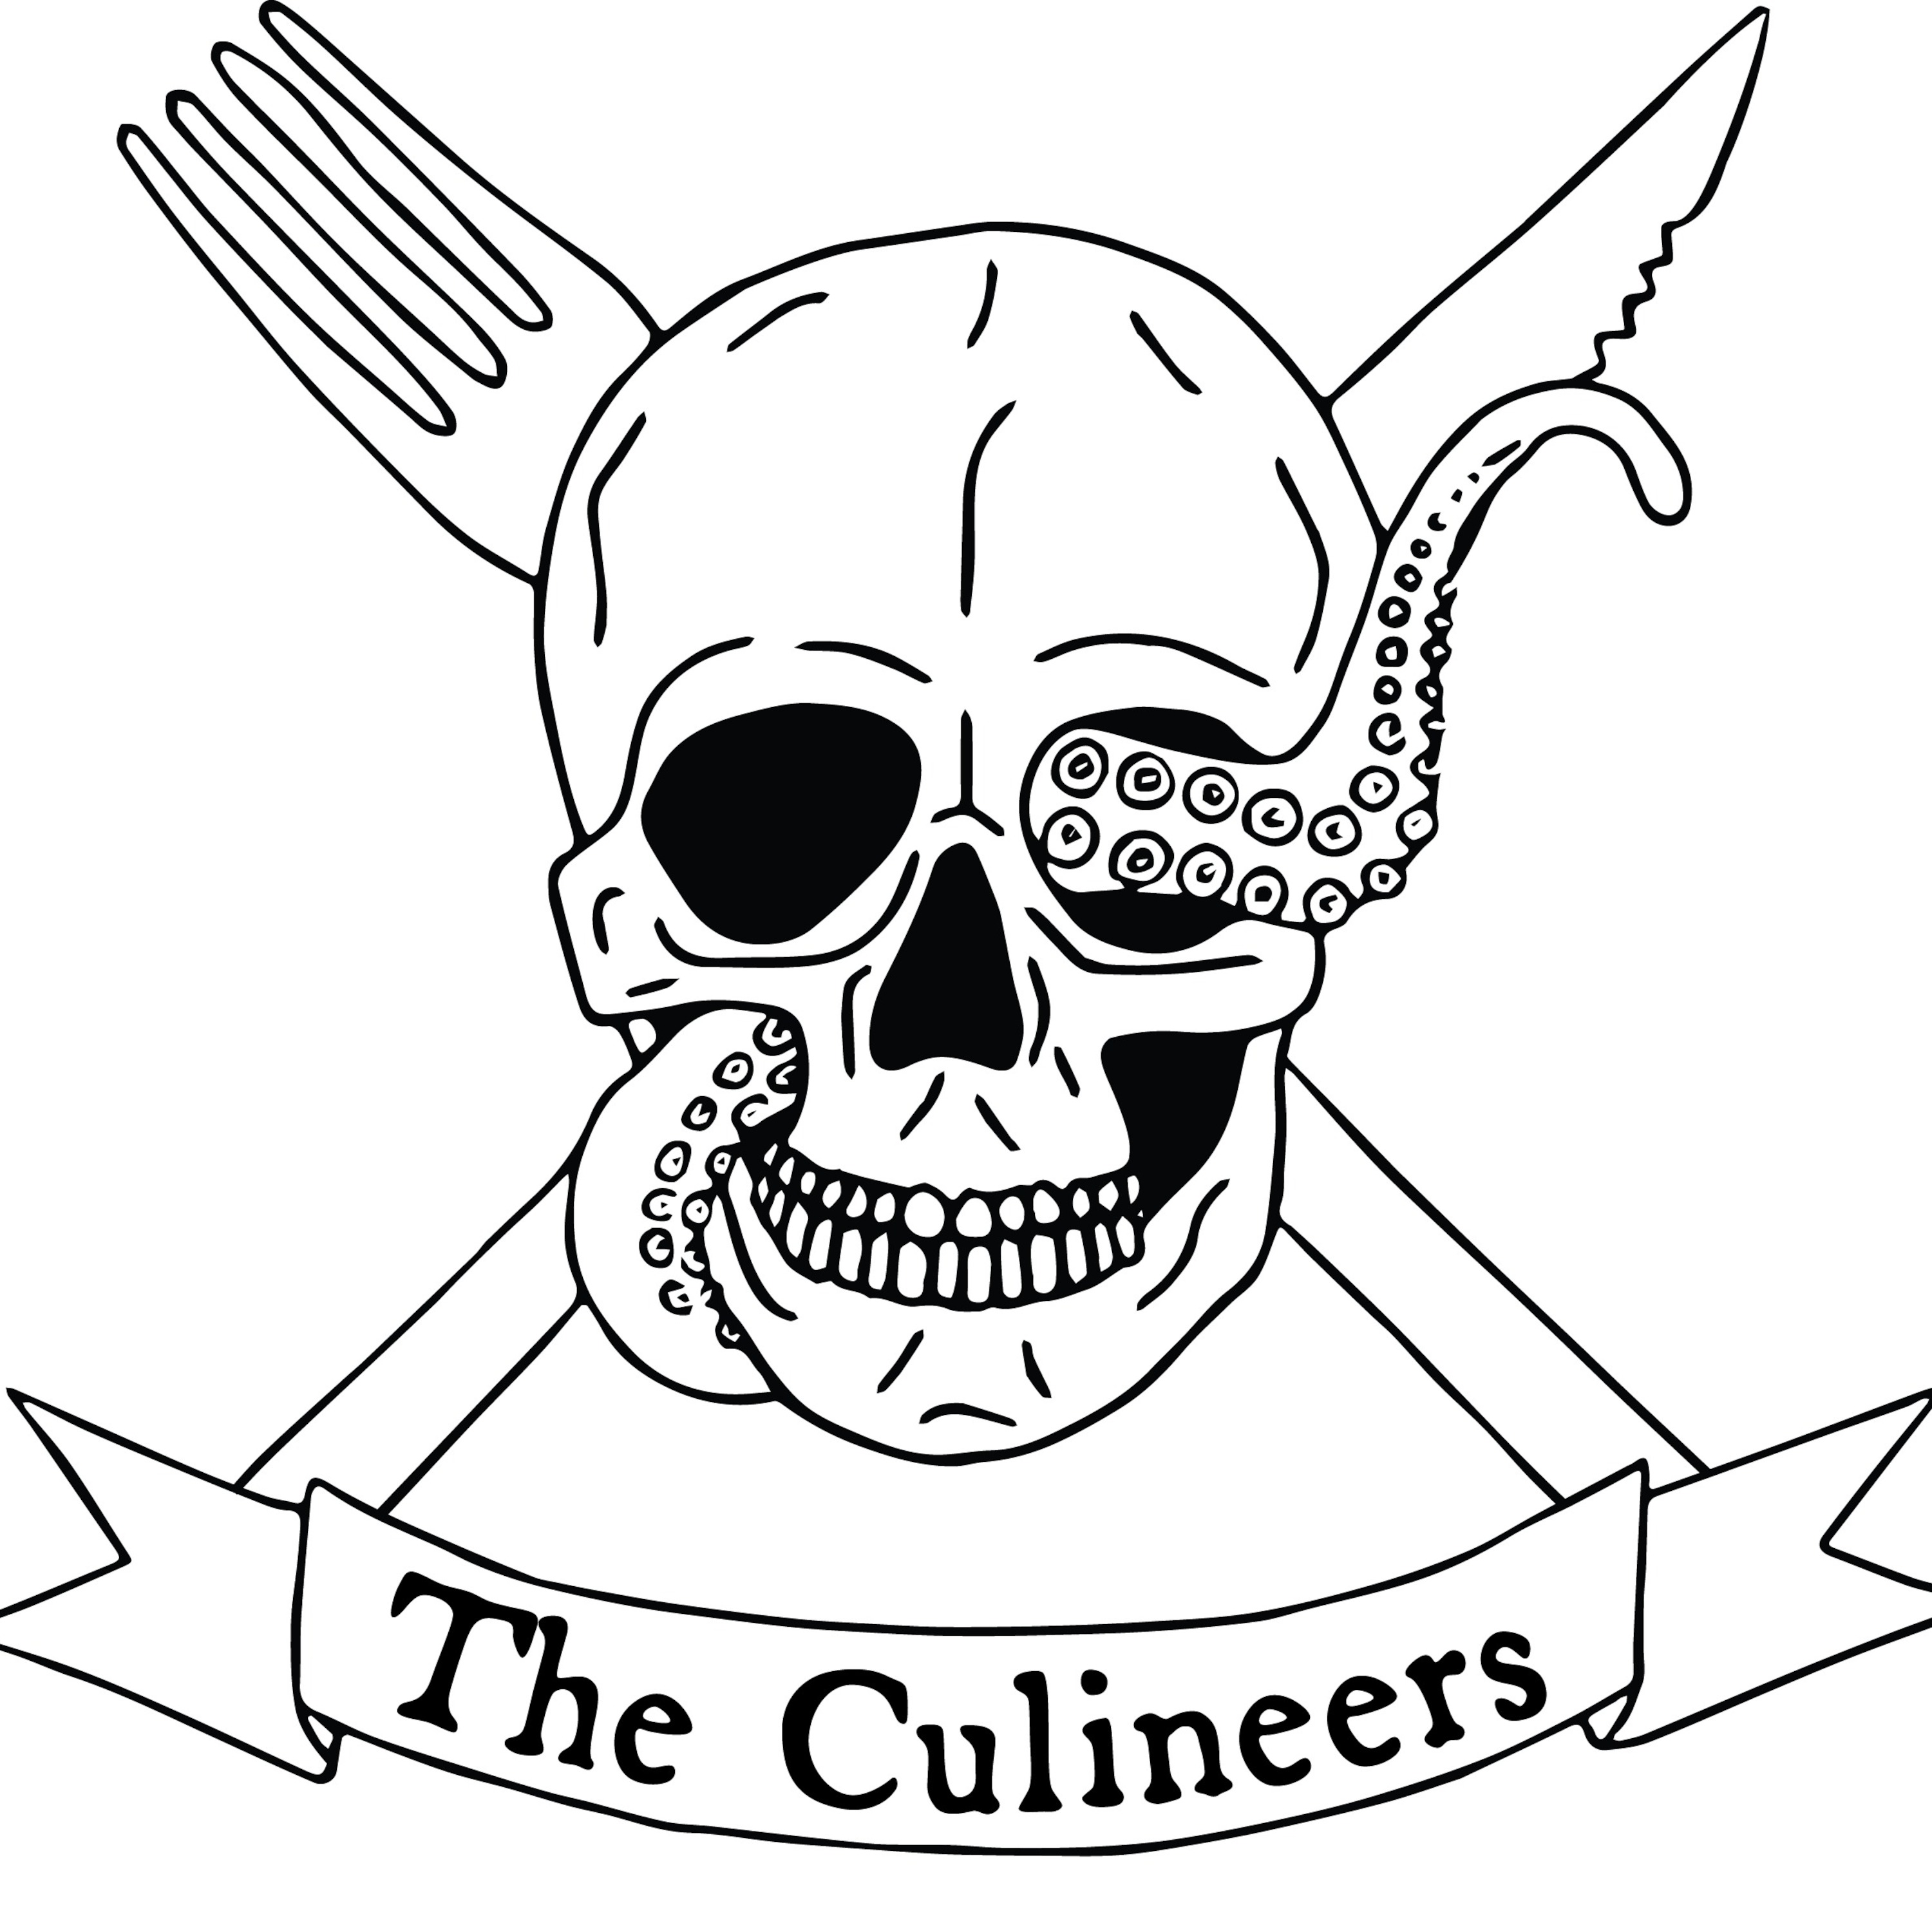 Culineers radio - Episode 9 - August 6 - 2017